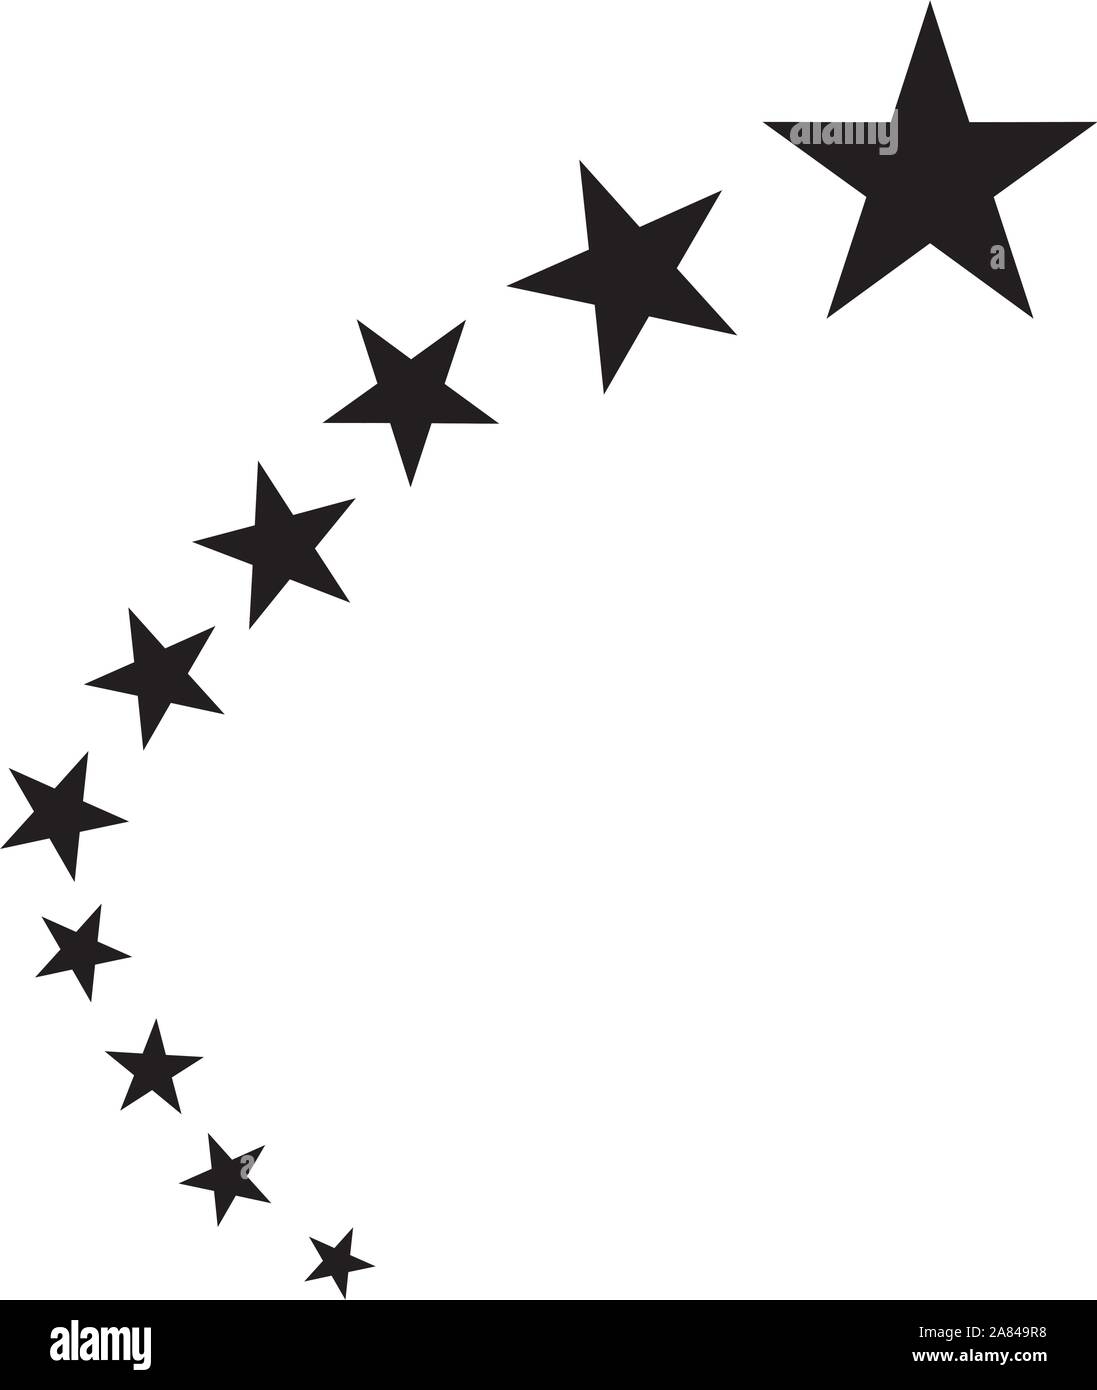 star icon. star design tattoos. Stock Vector